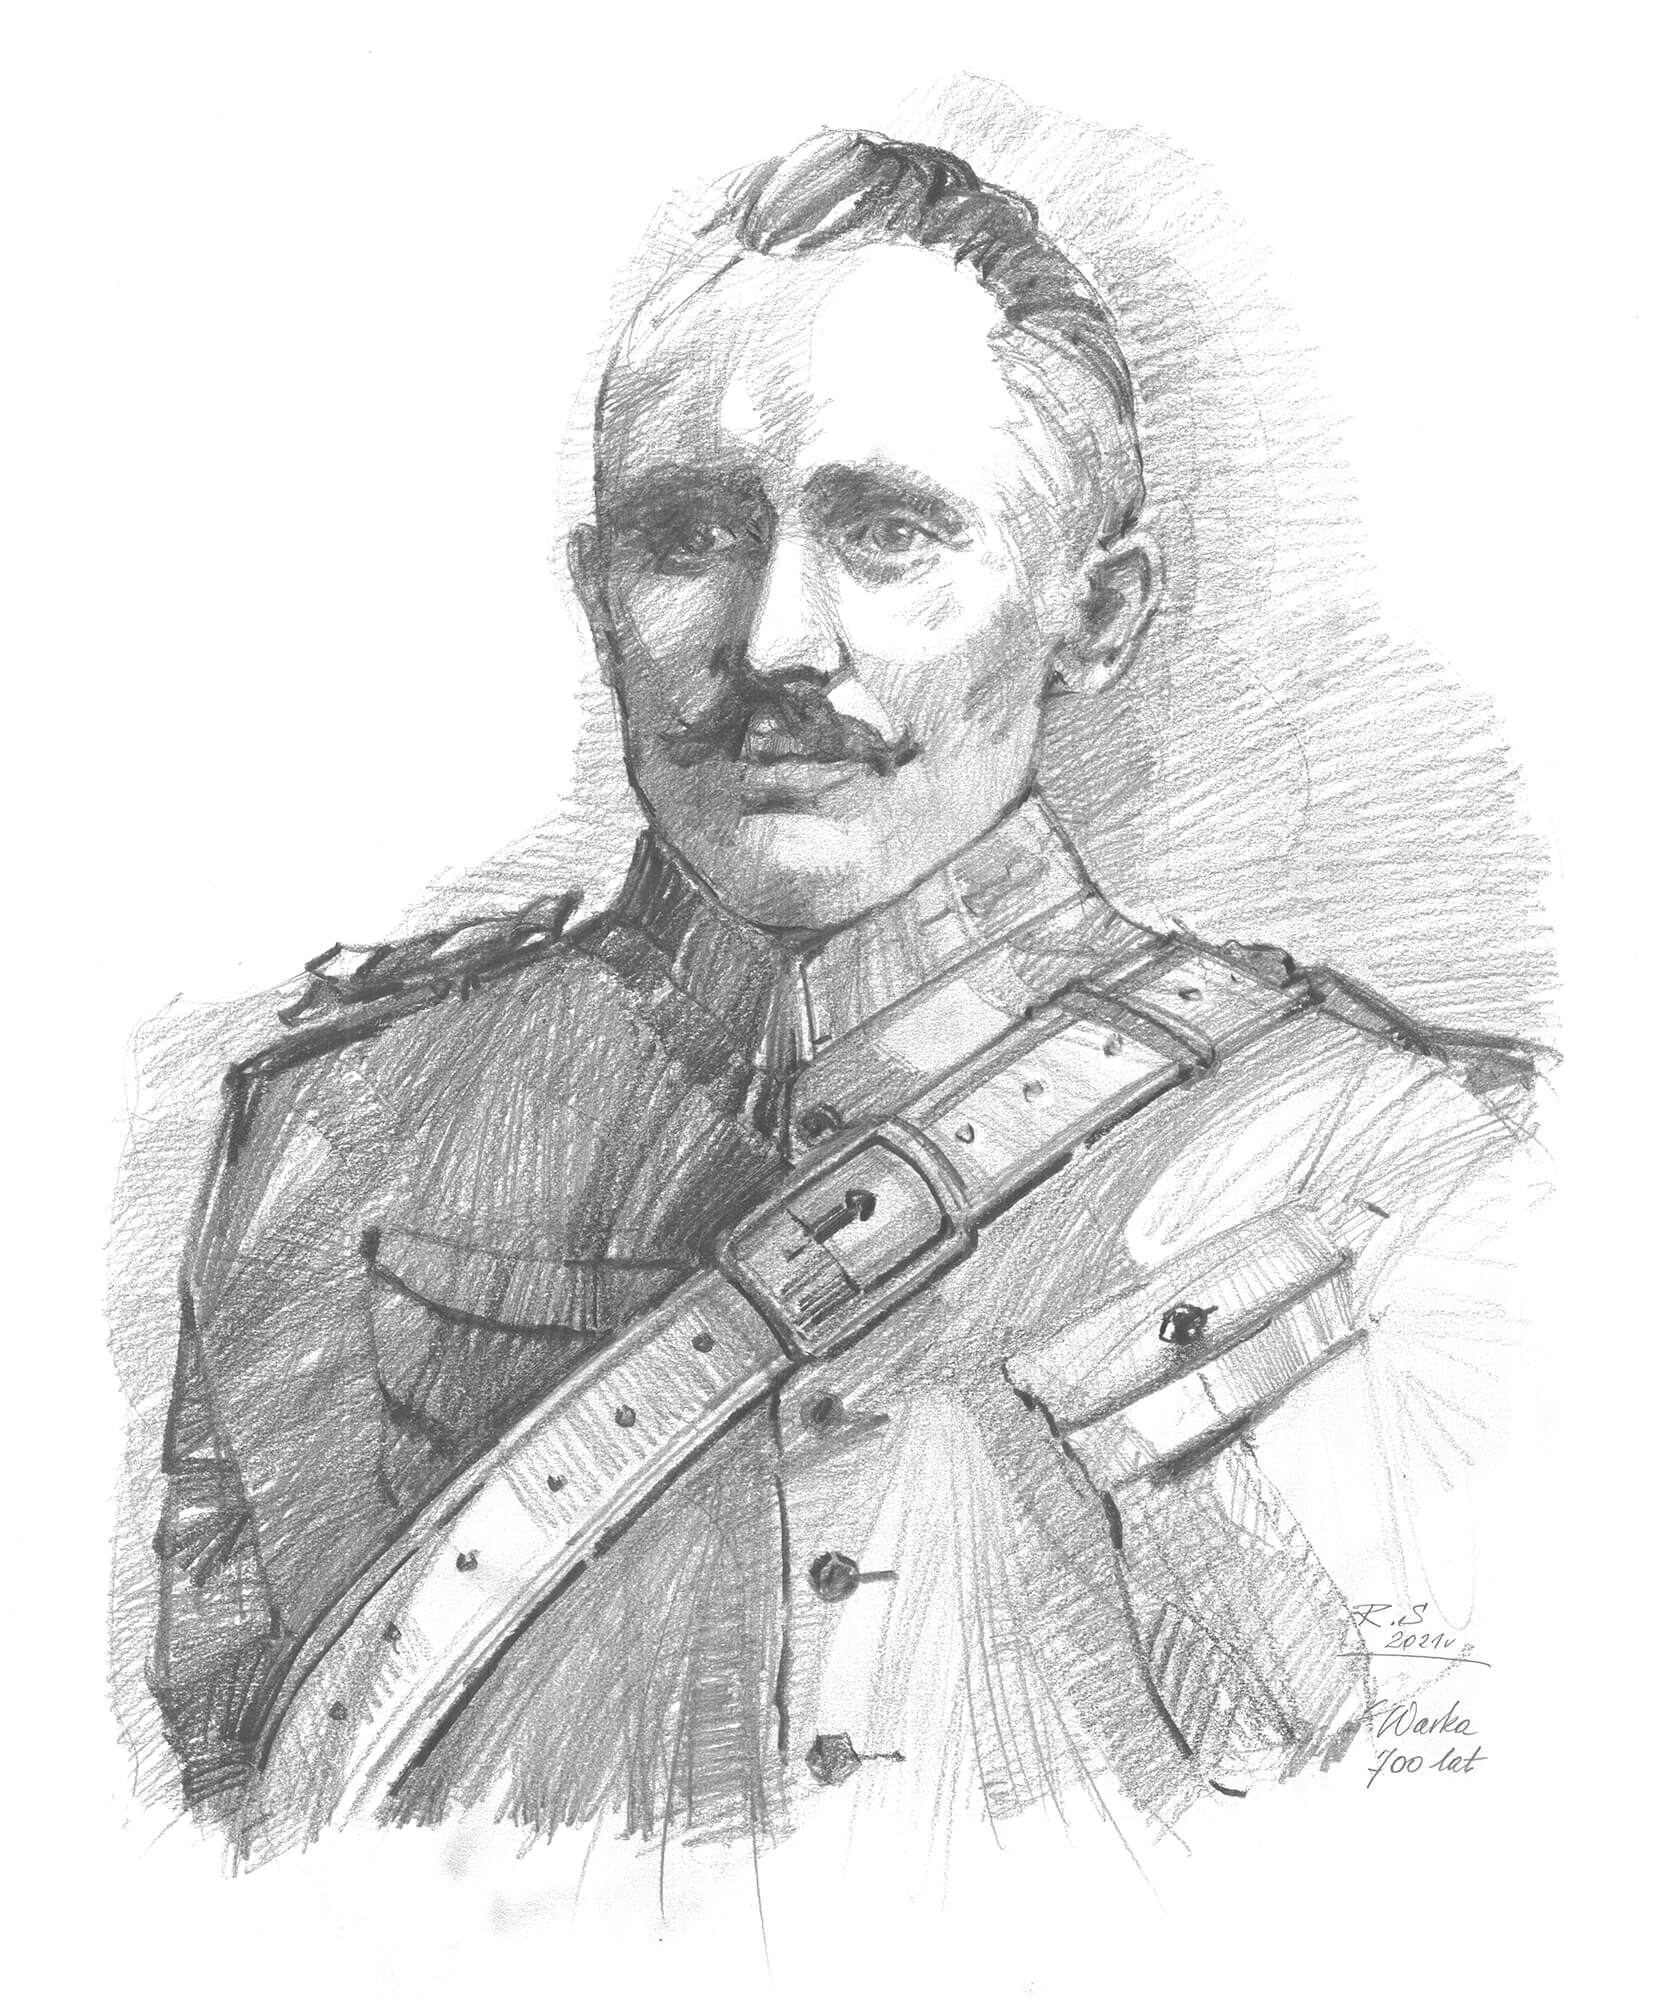 Józef Manczarski, drawing by S. Ragan